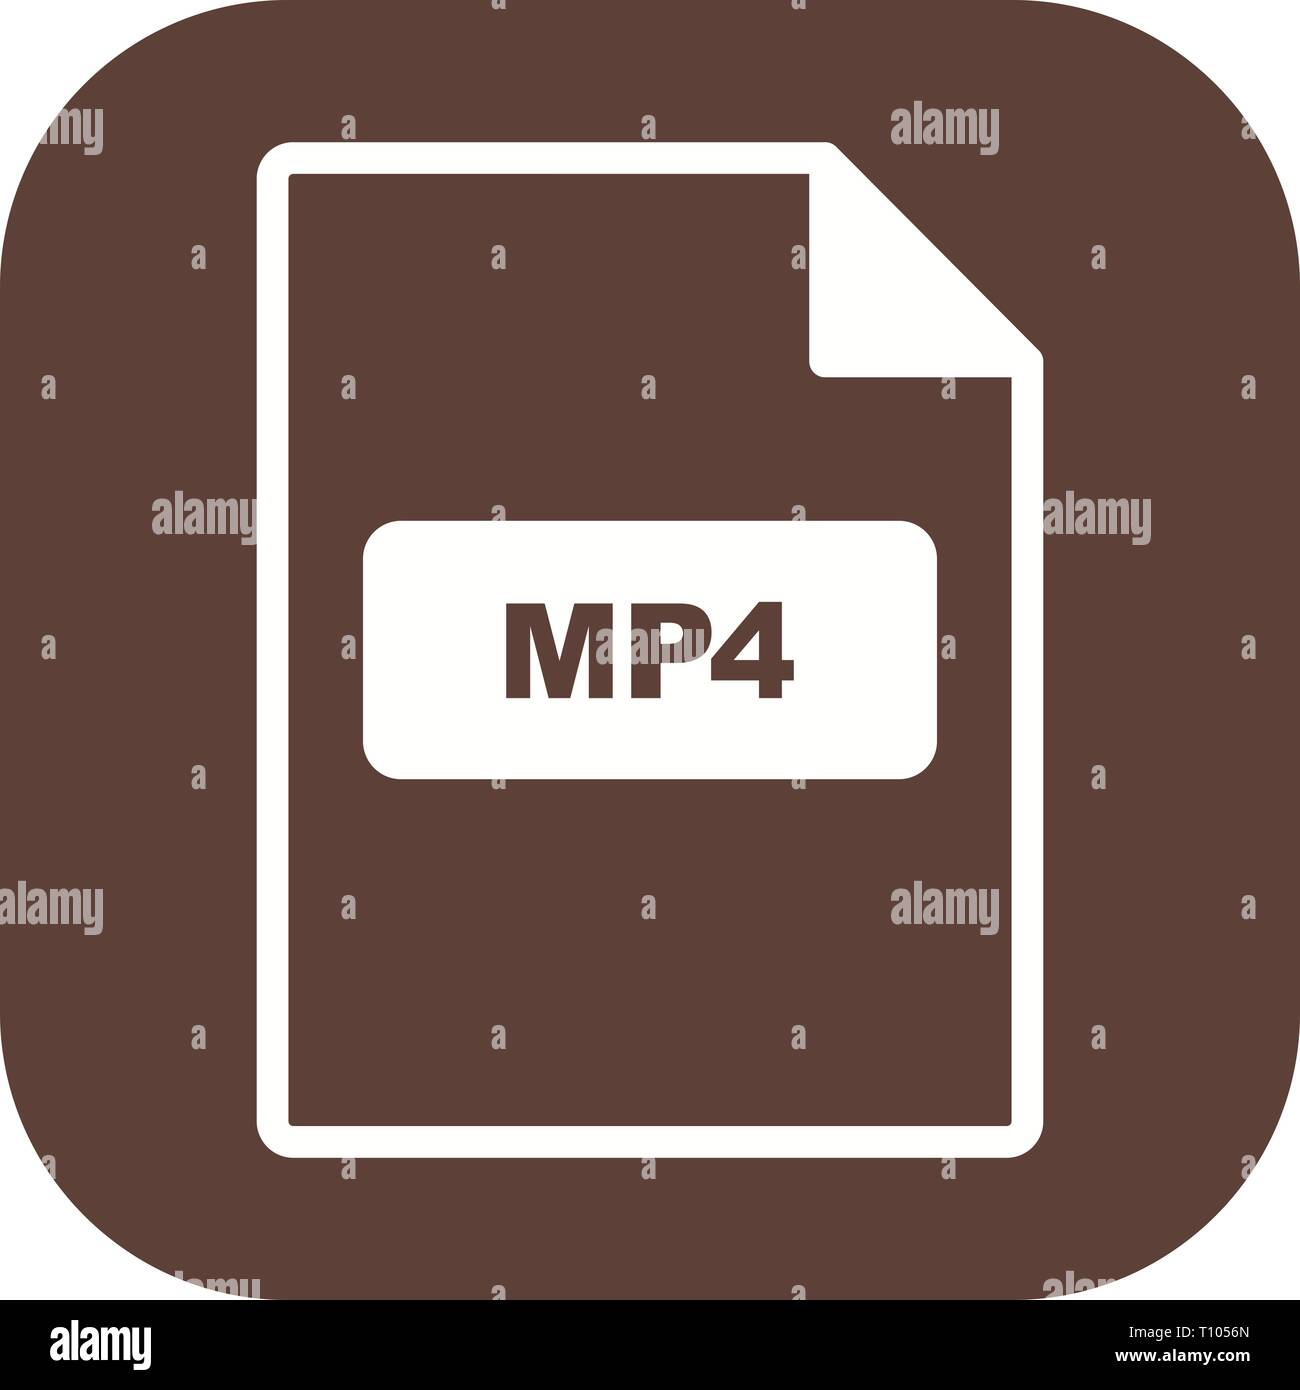 Illustration MP4 Icon Stock Photo